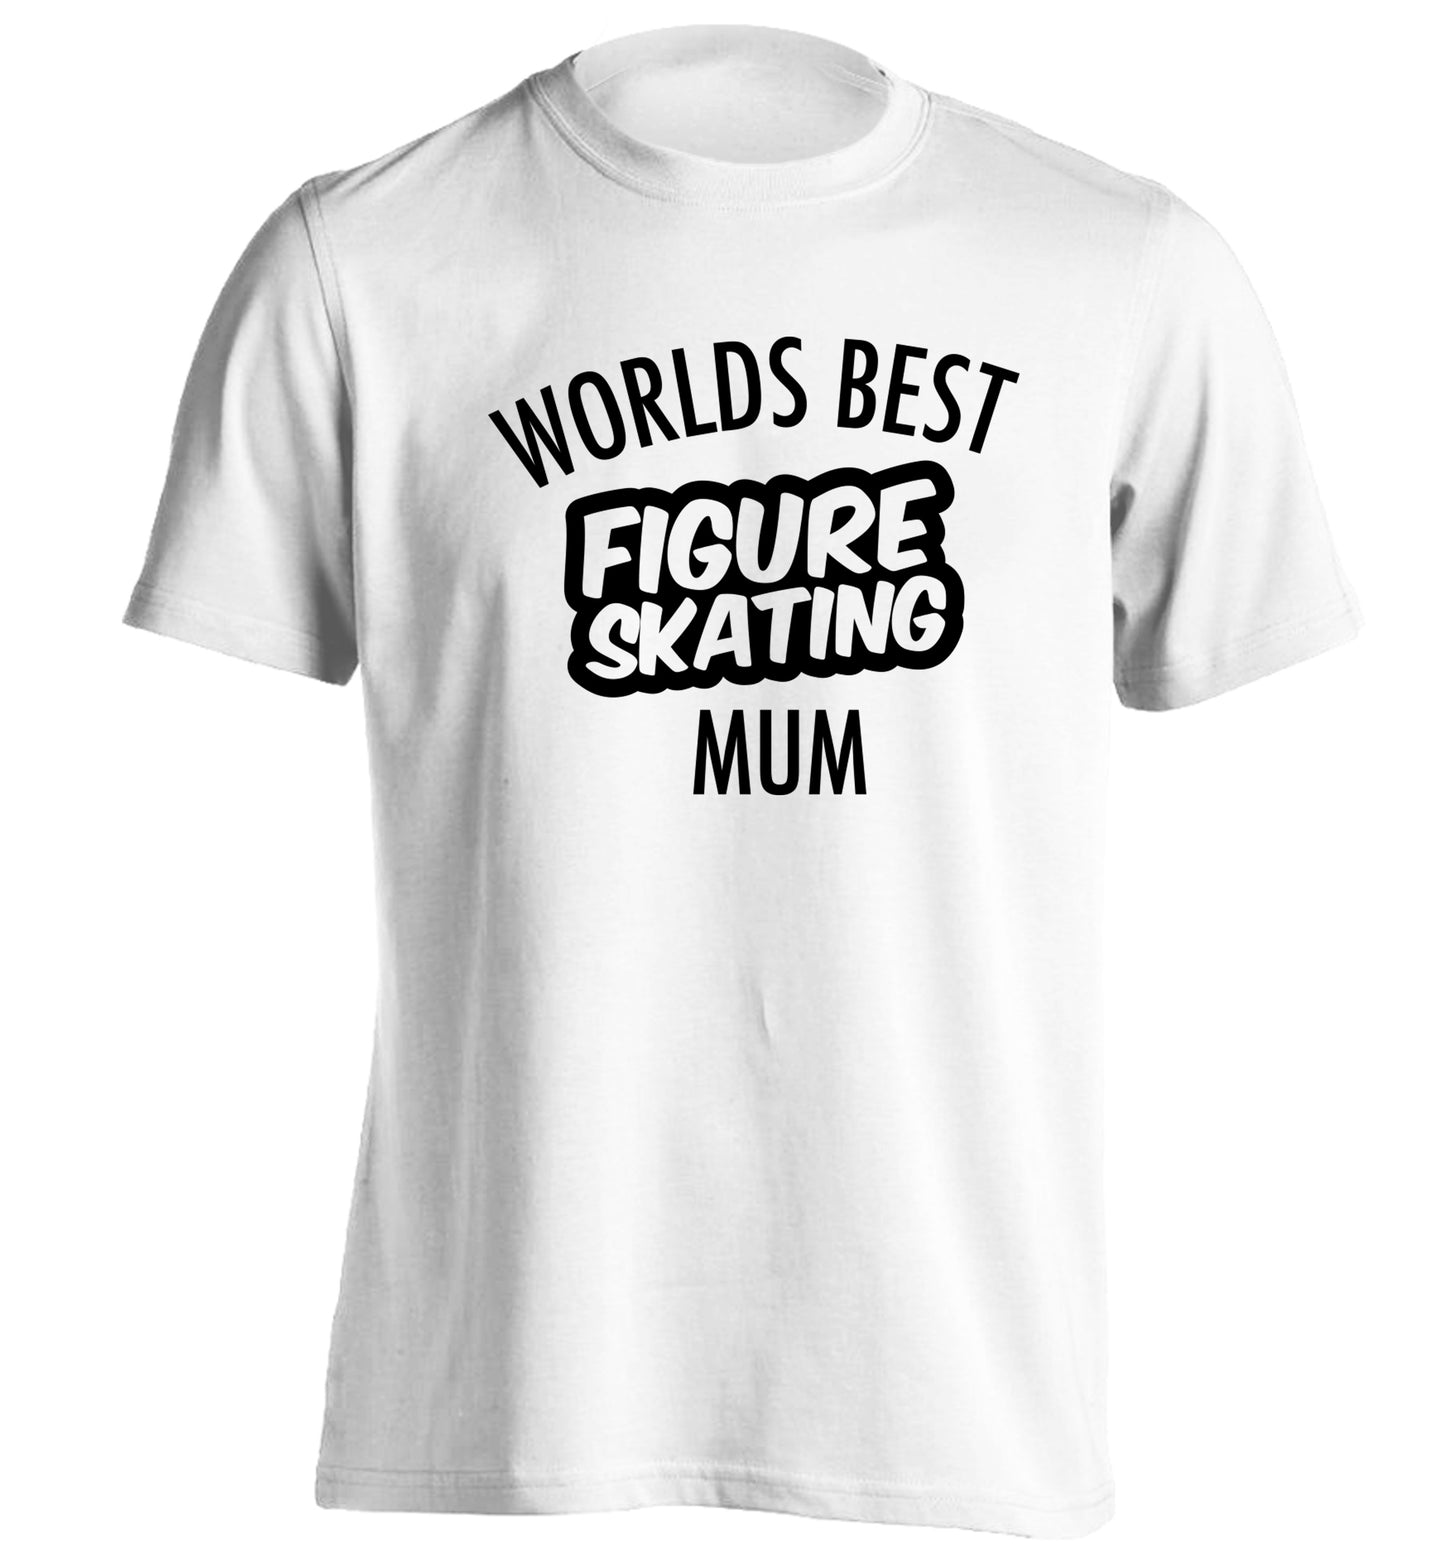 Worlds best figure skating mum adults unisexwhite Tshirt 2XL